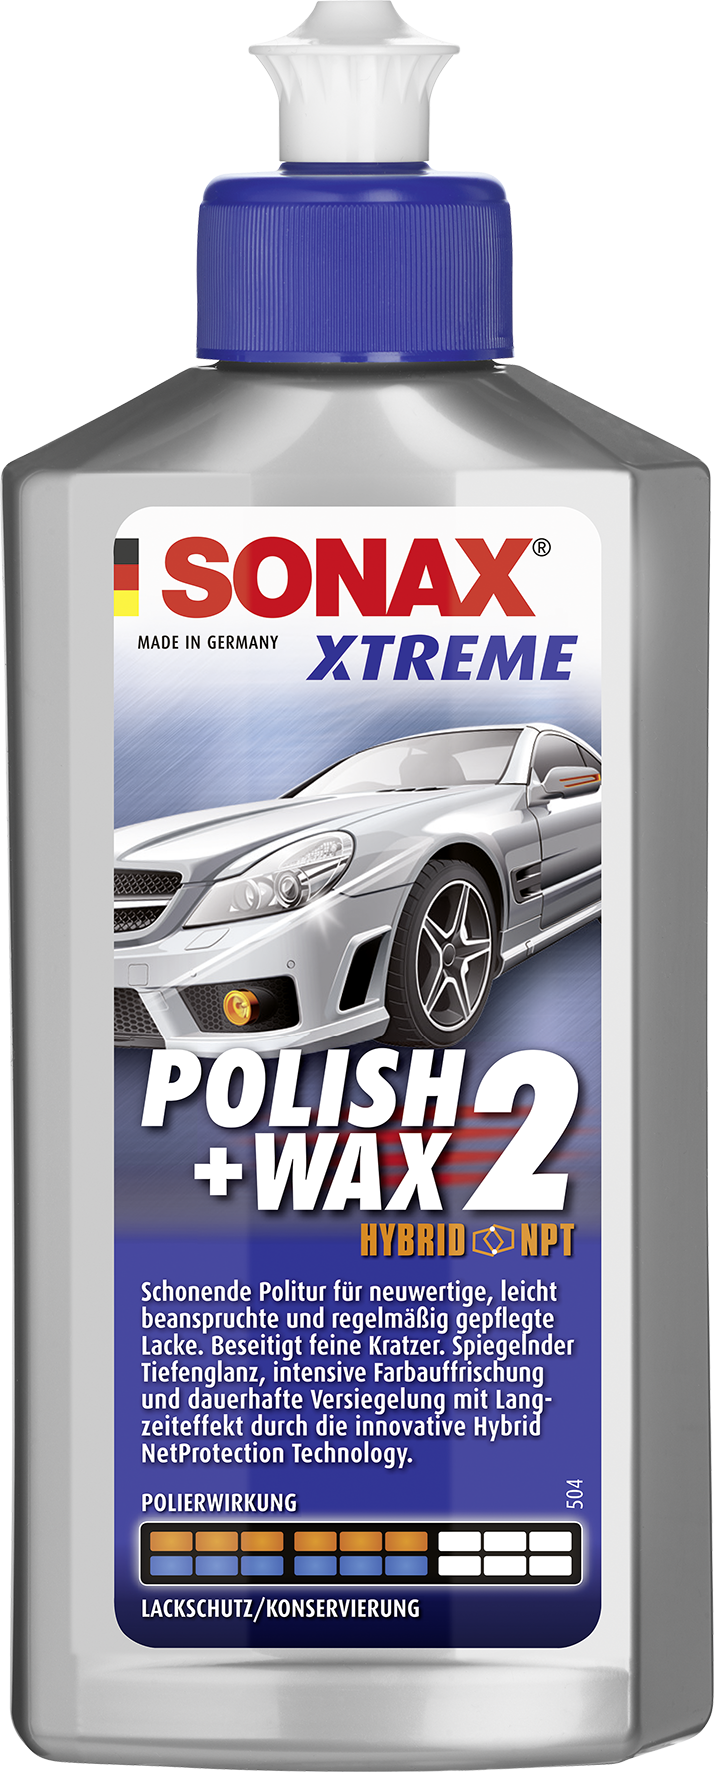 Sonax Xtreme Polish & Wax nr. 2